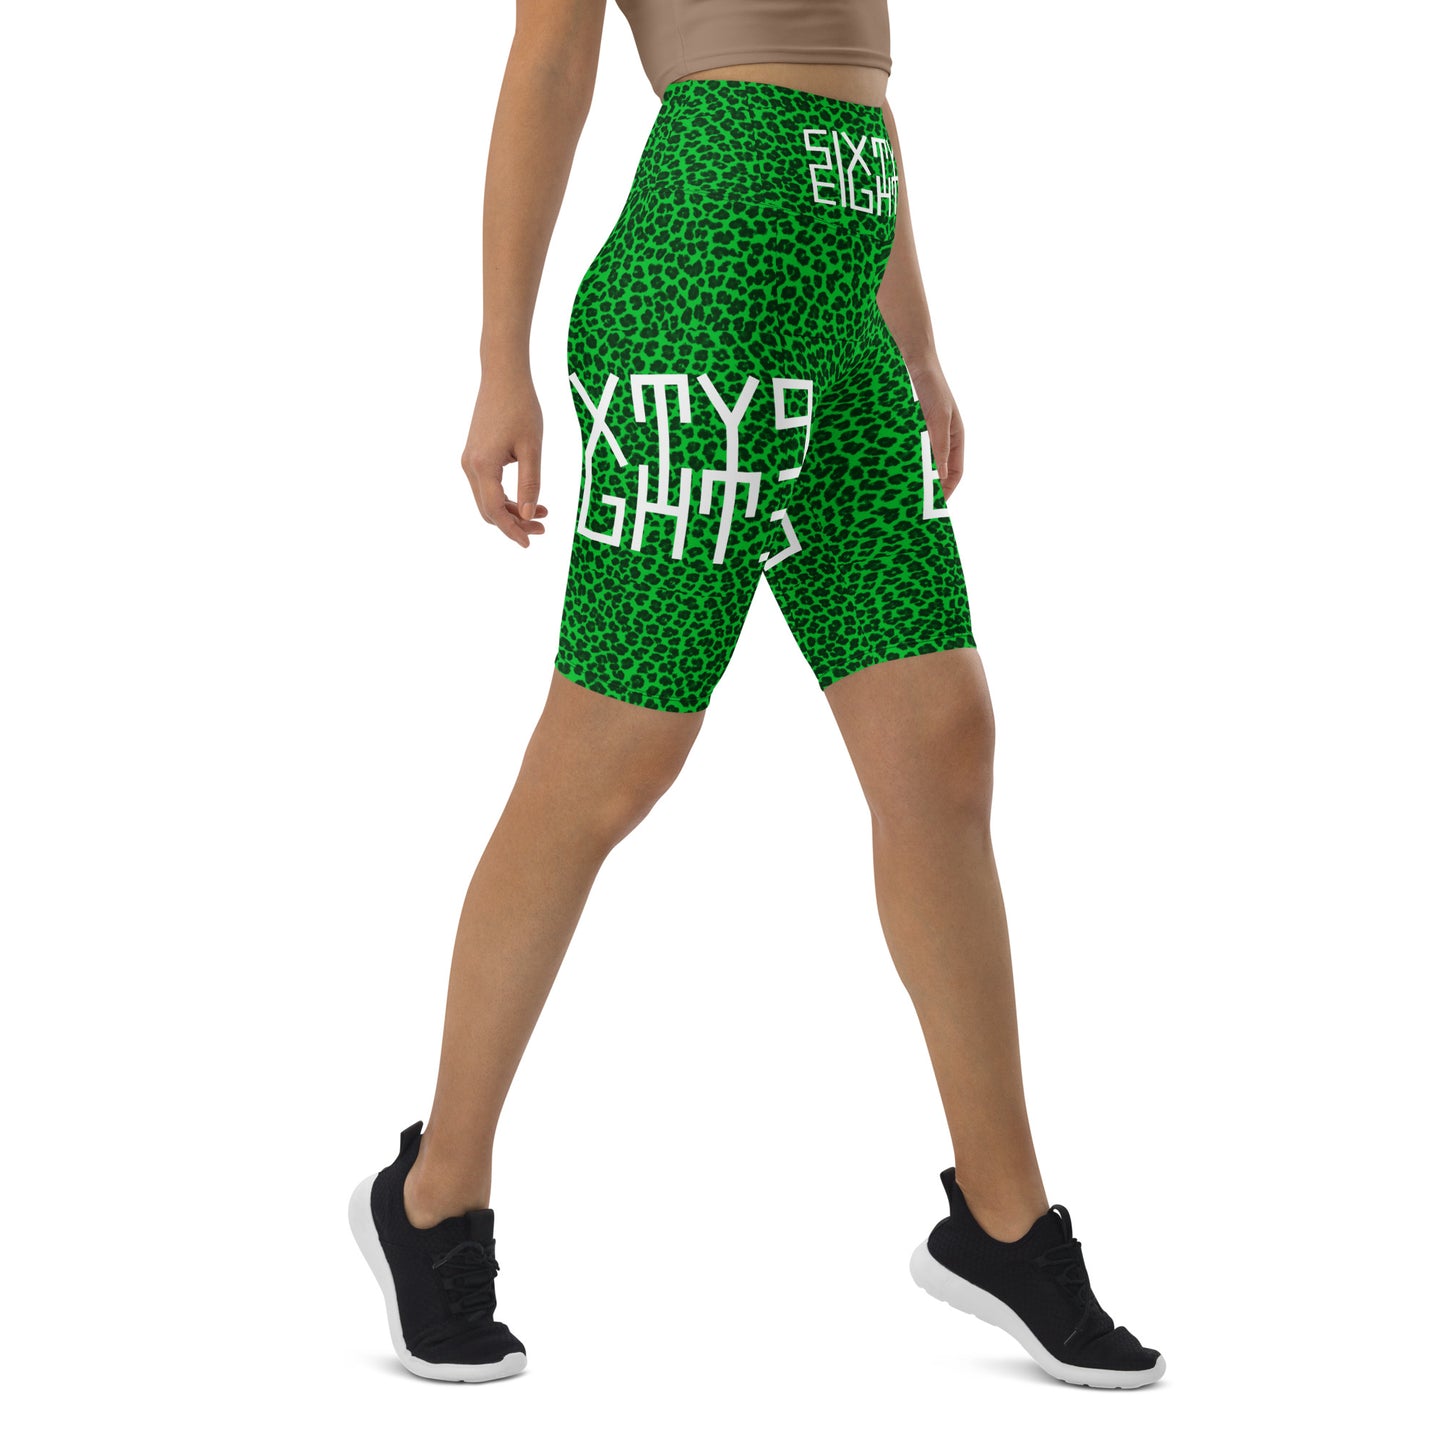 Sixty Eight 93 Logo White Cheetah Lime Green Biker Shorts